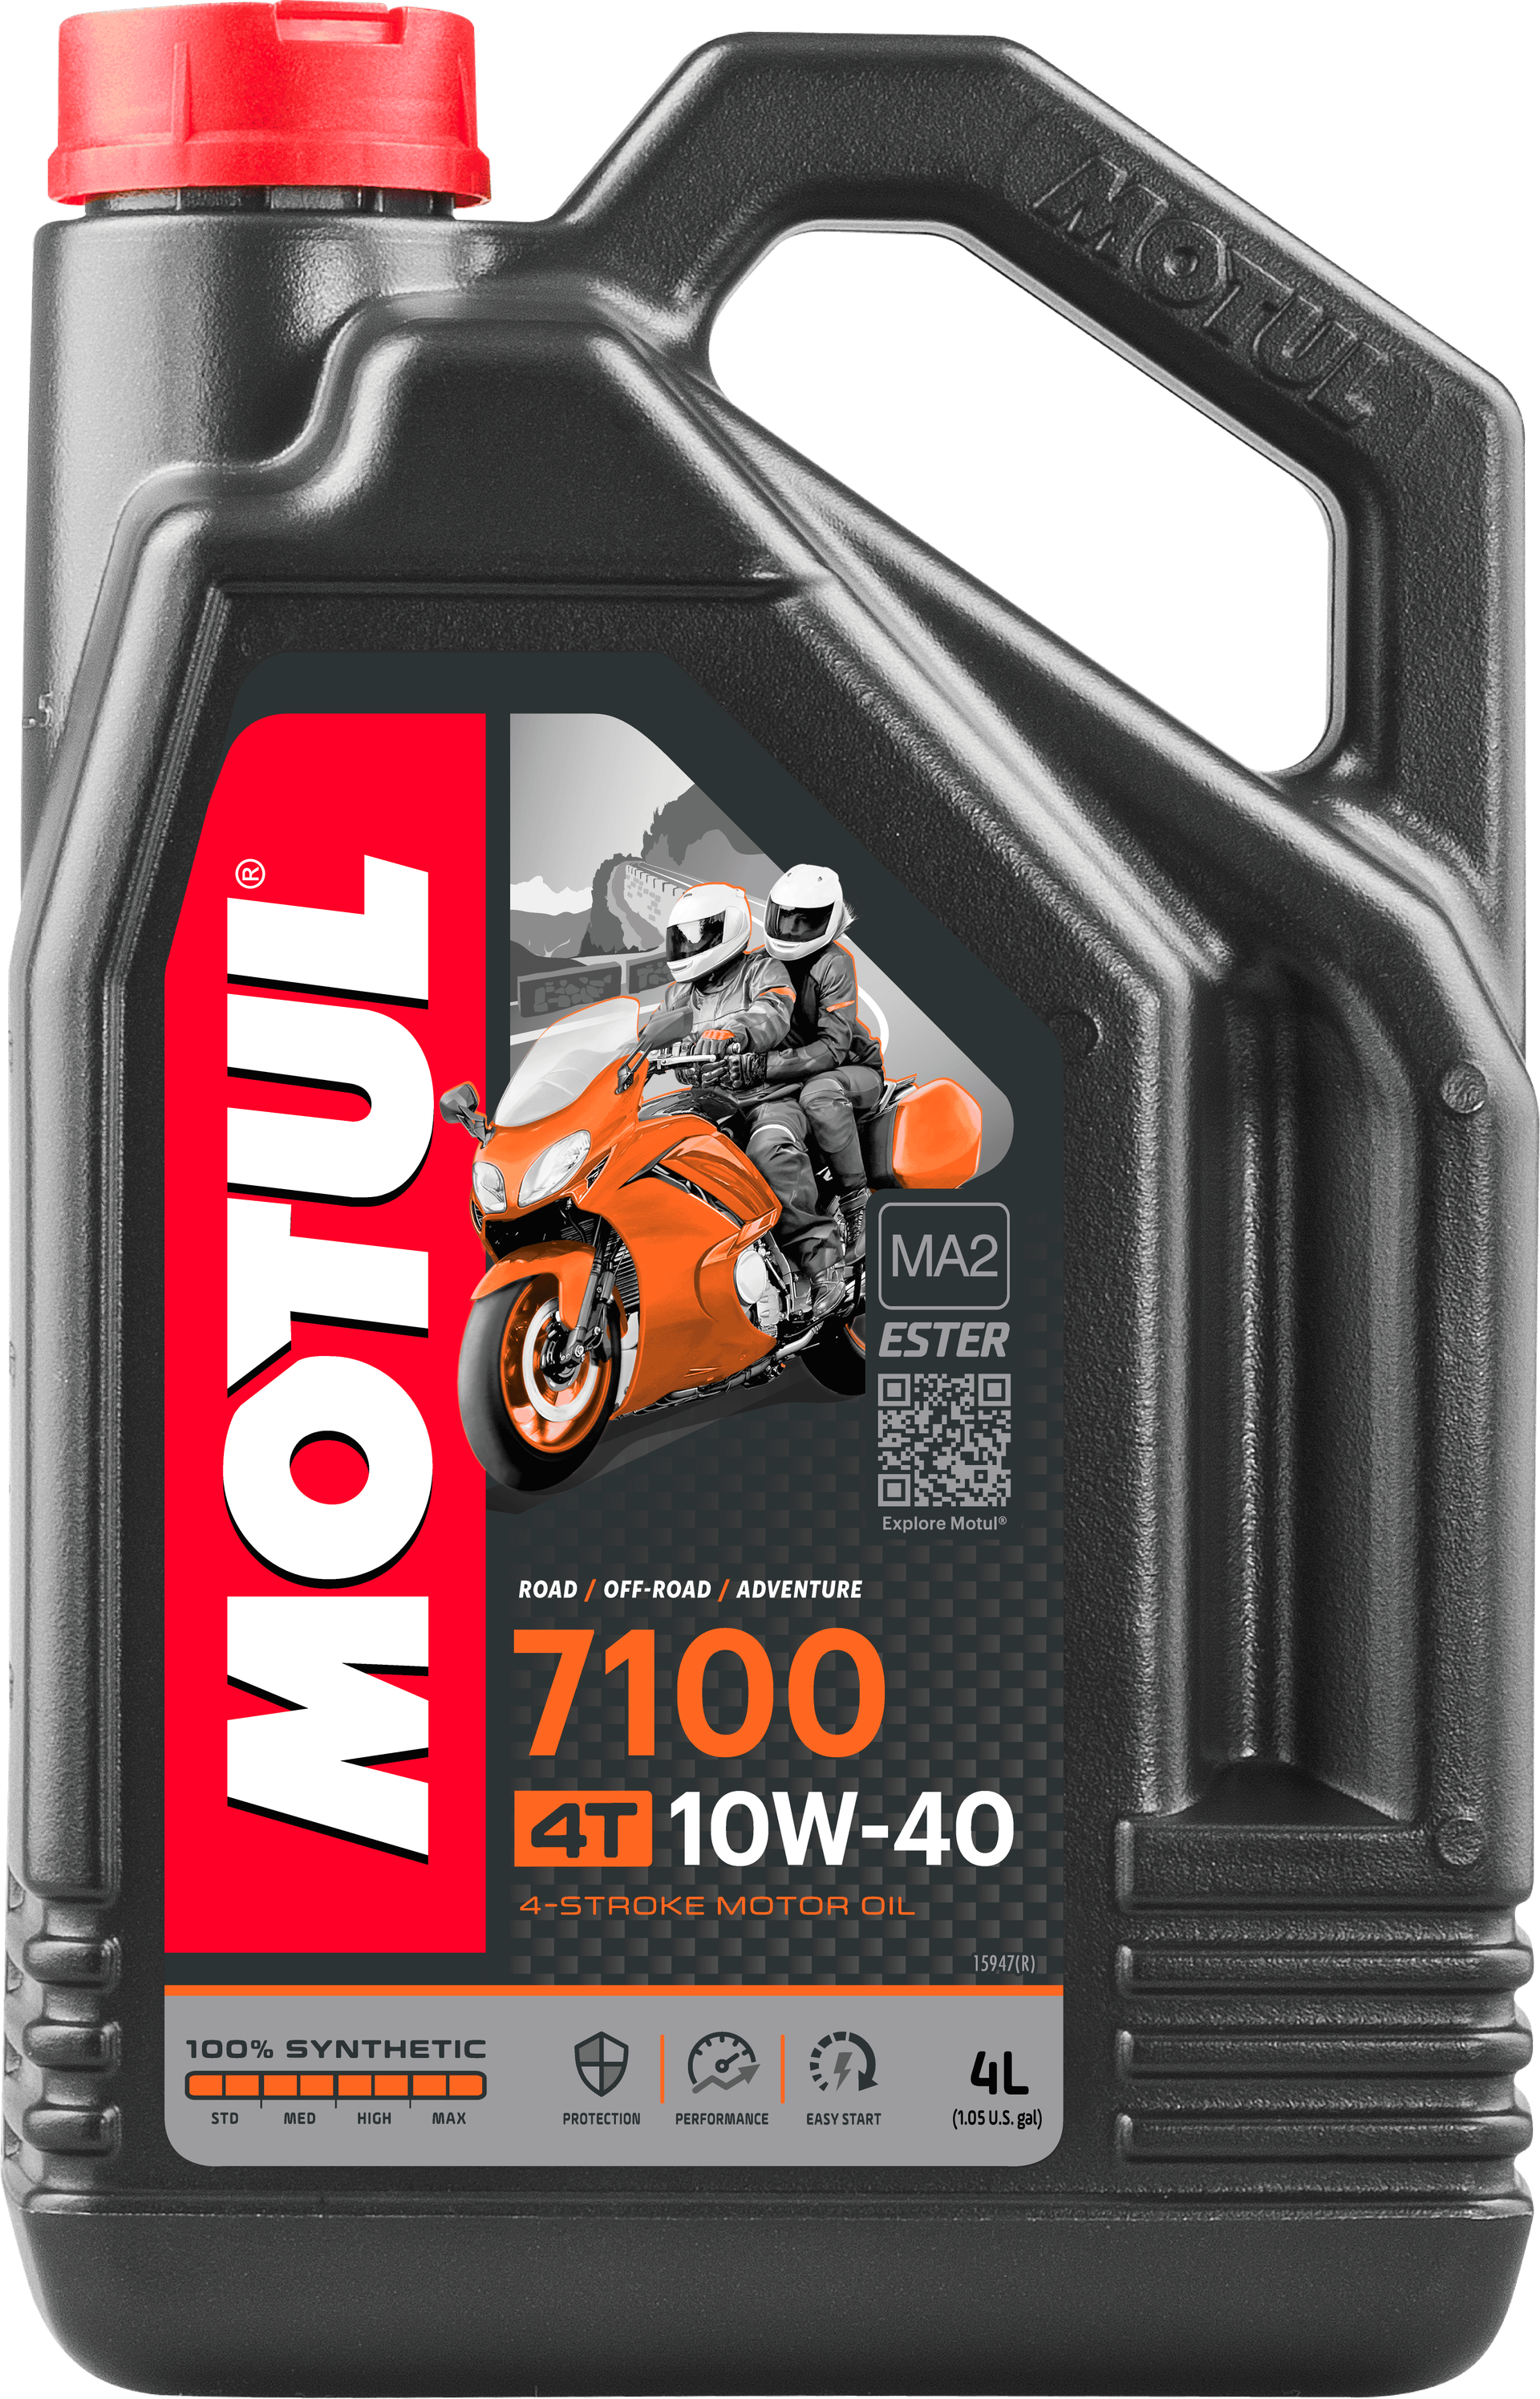 Motul 300V 10W40 4T engine oil